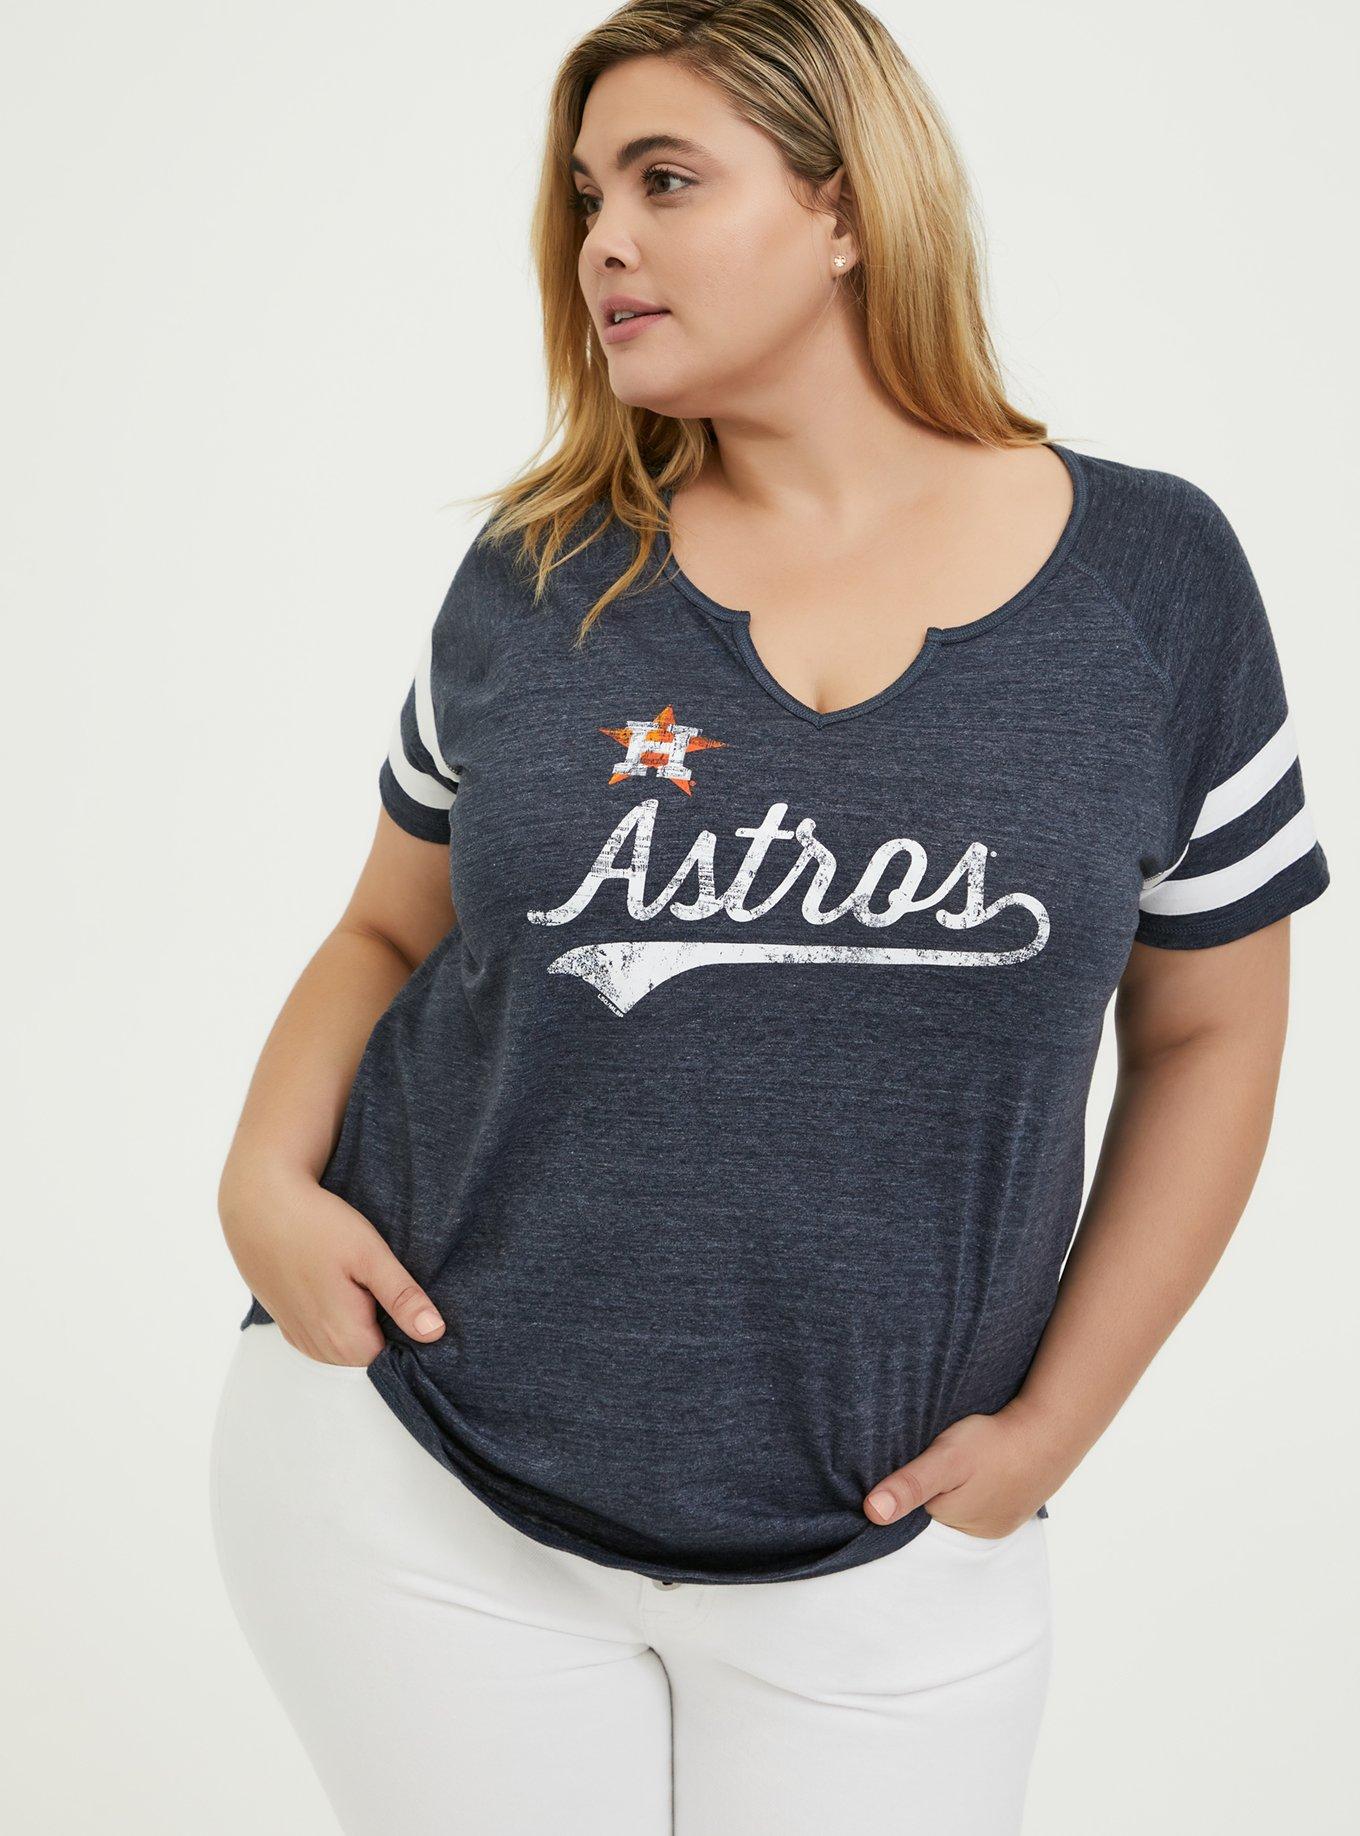 astros maternity shirt